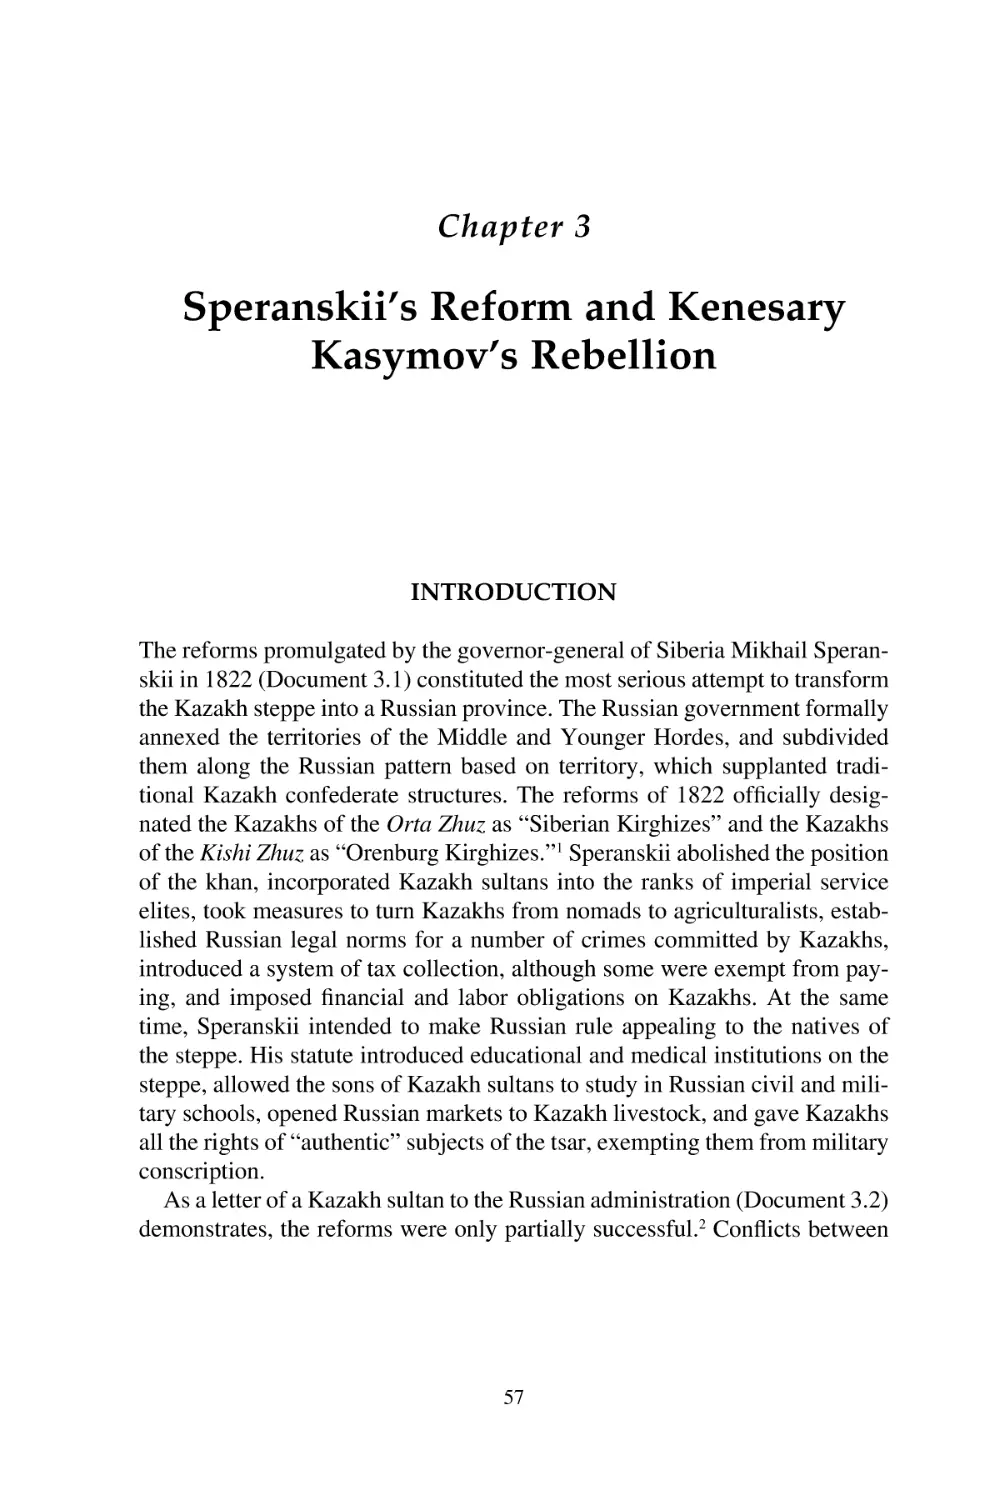 3. Speranskii’s Reform and Kenesary Kasymov’s Rebellion